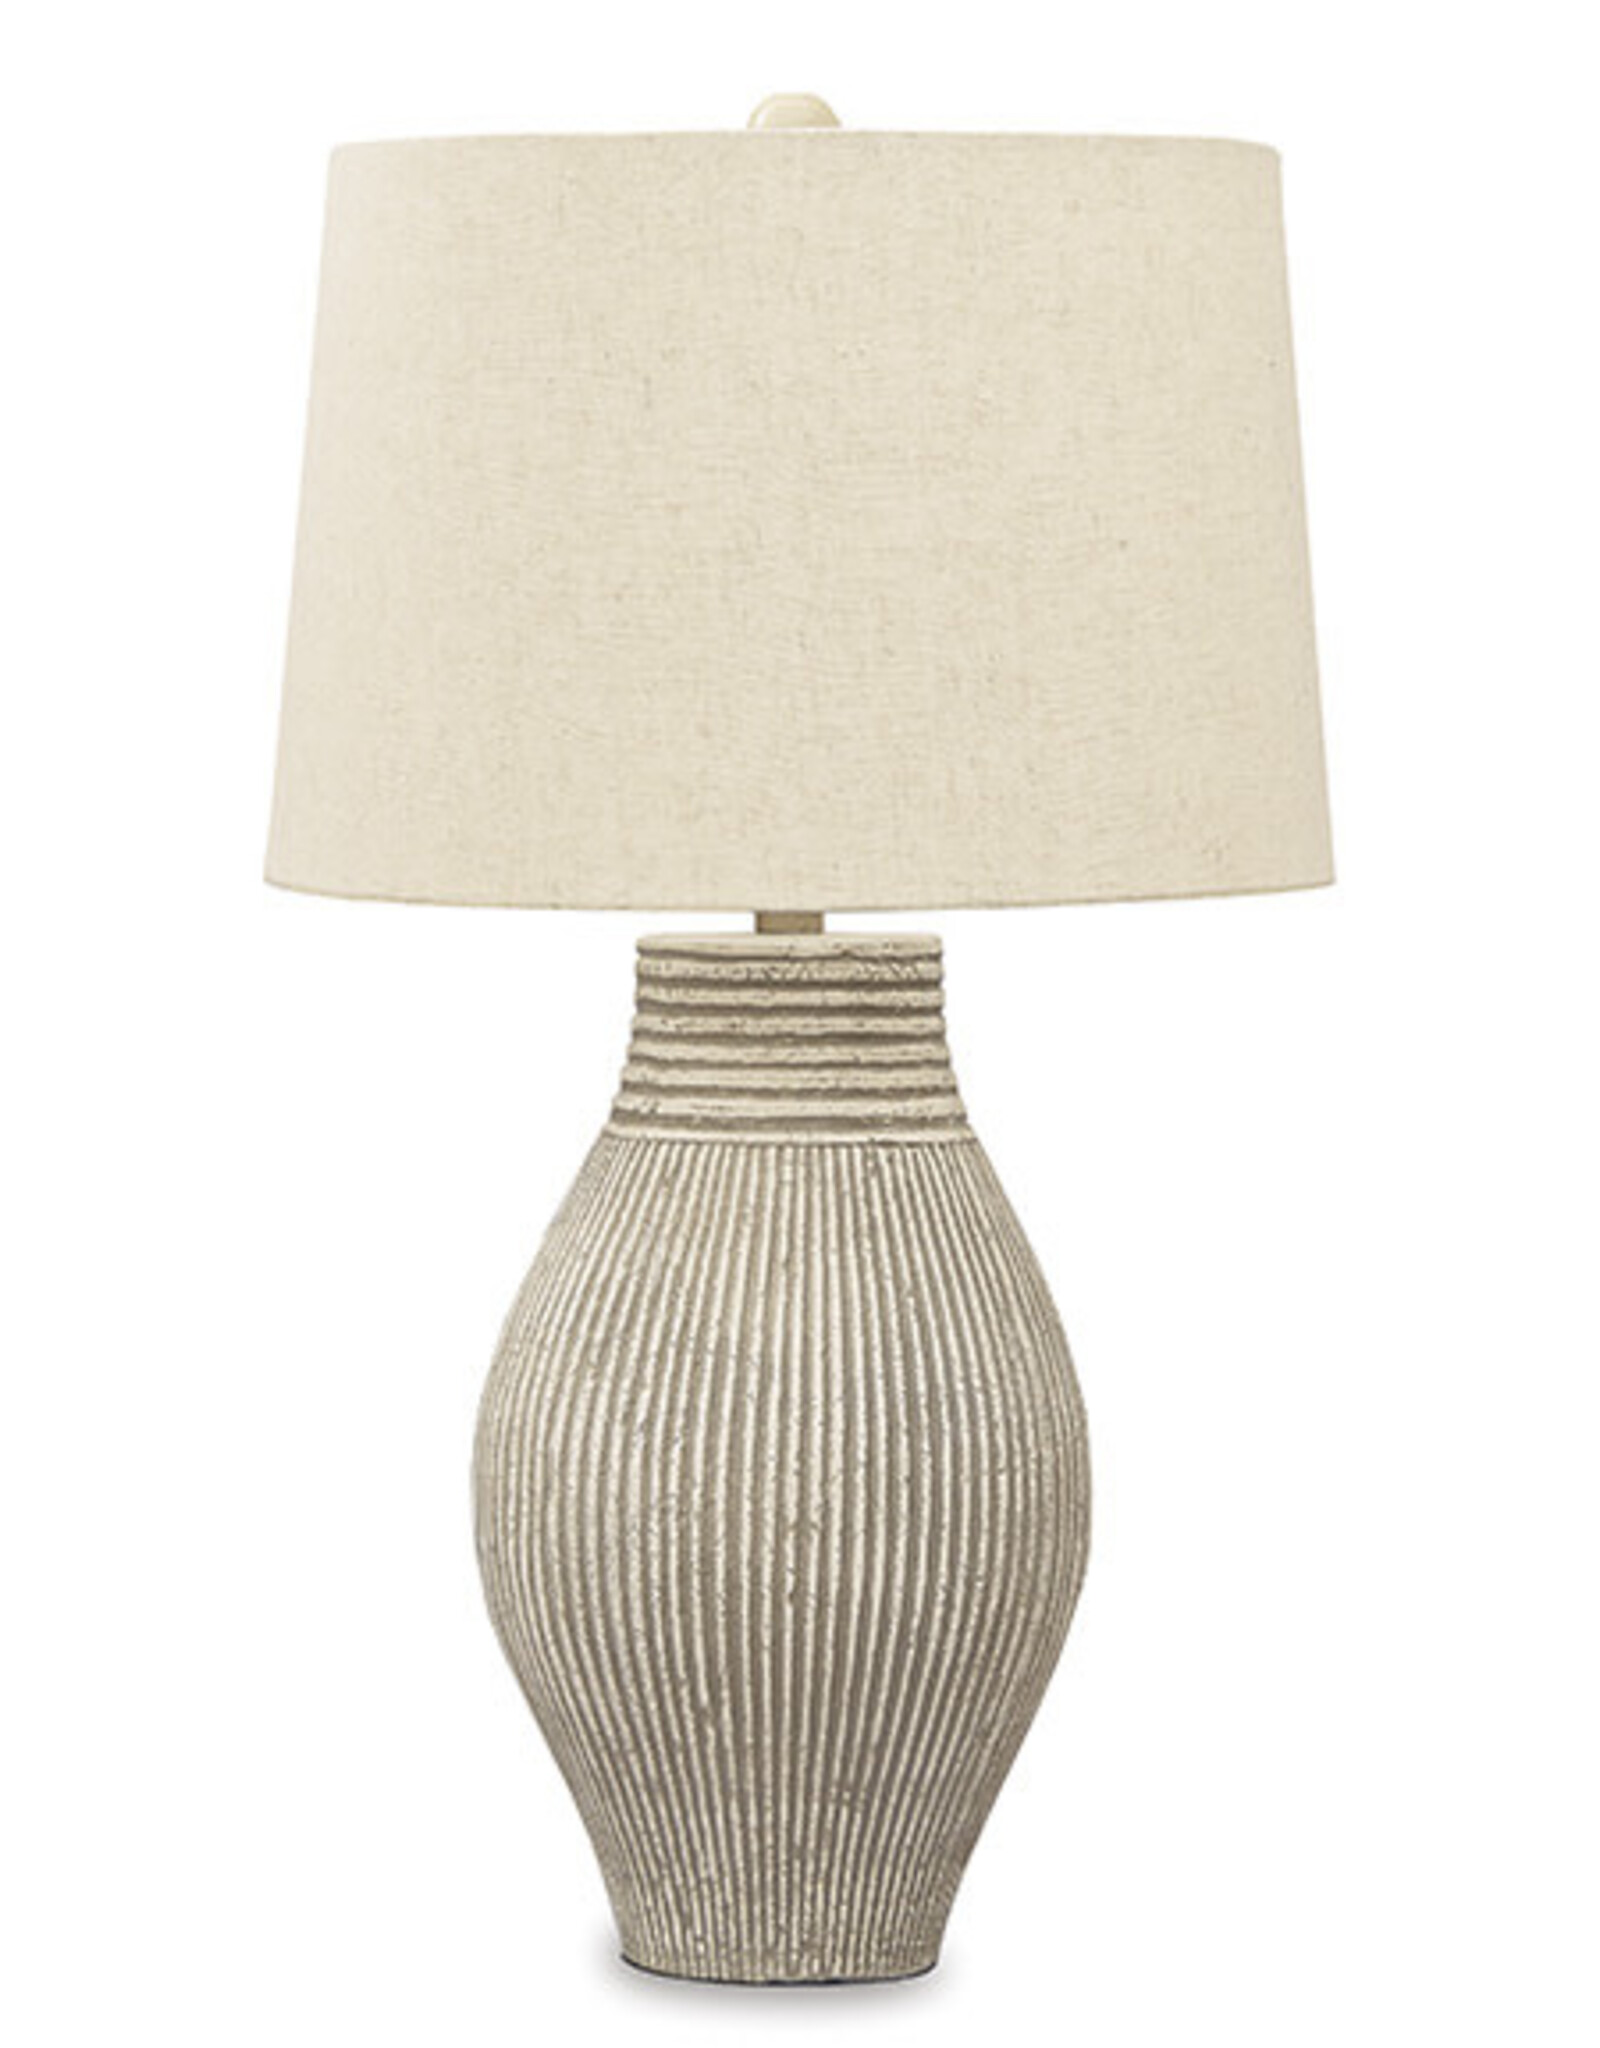 Table Lamp, Neutral hues, organic texture, L235634